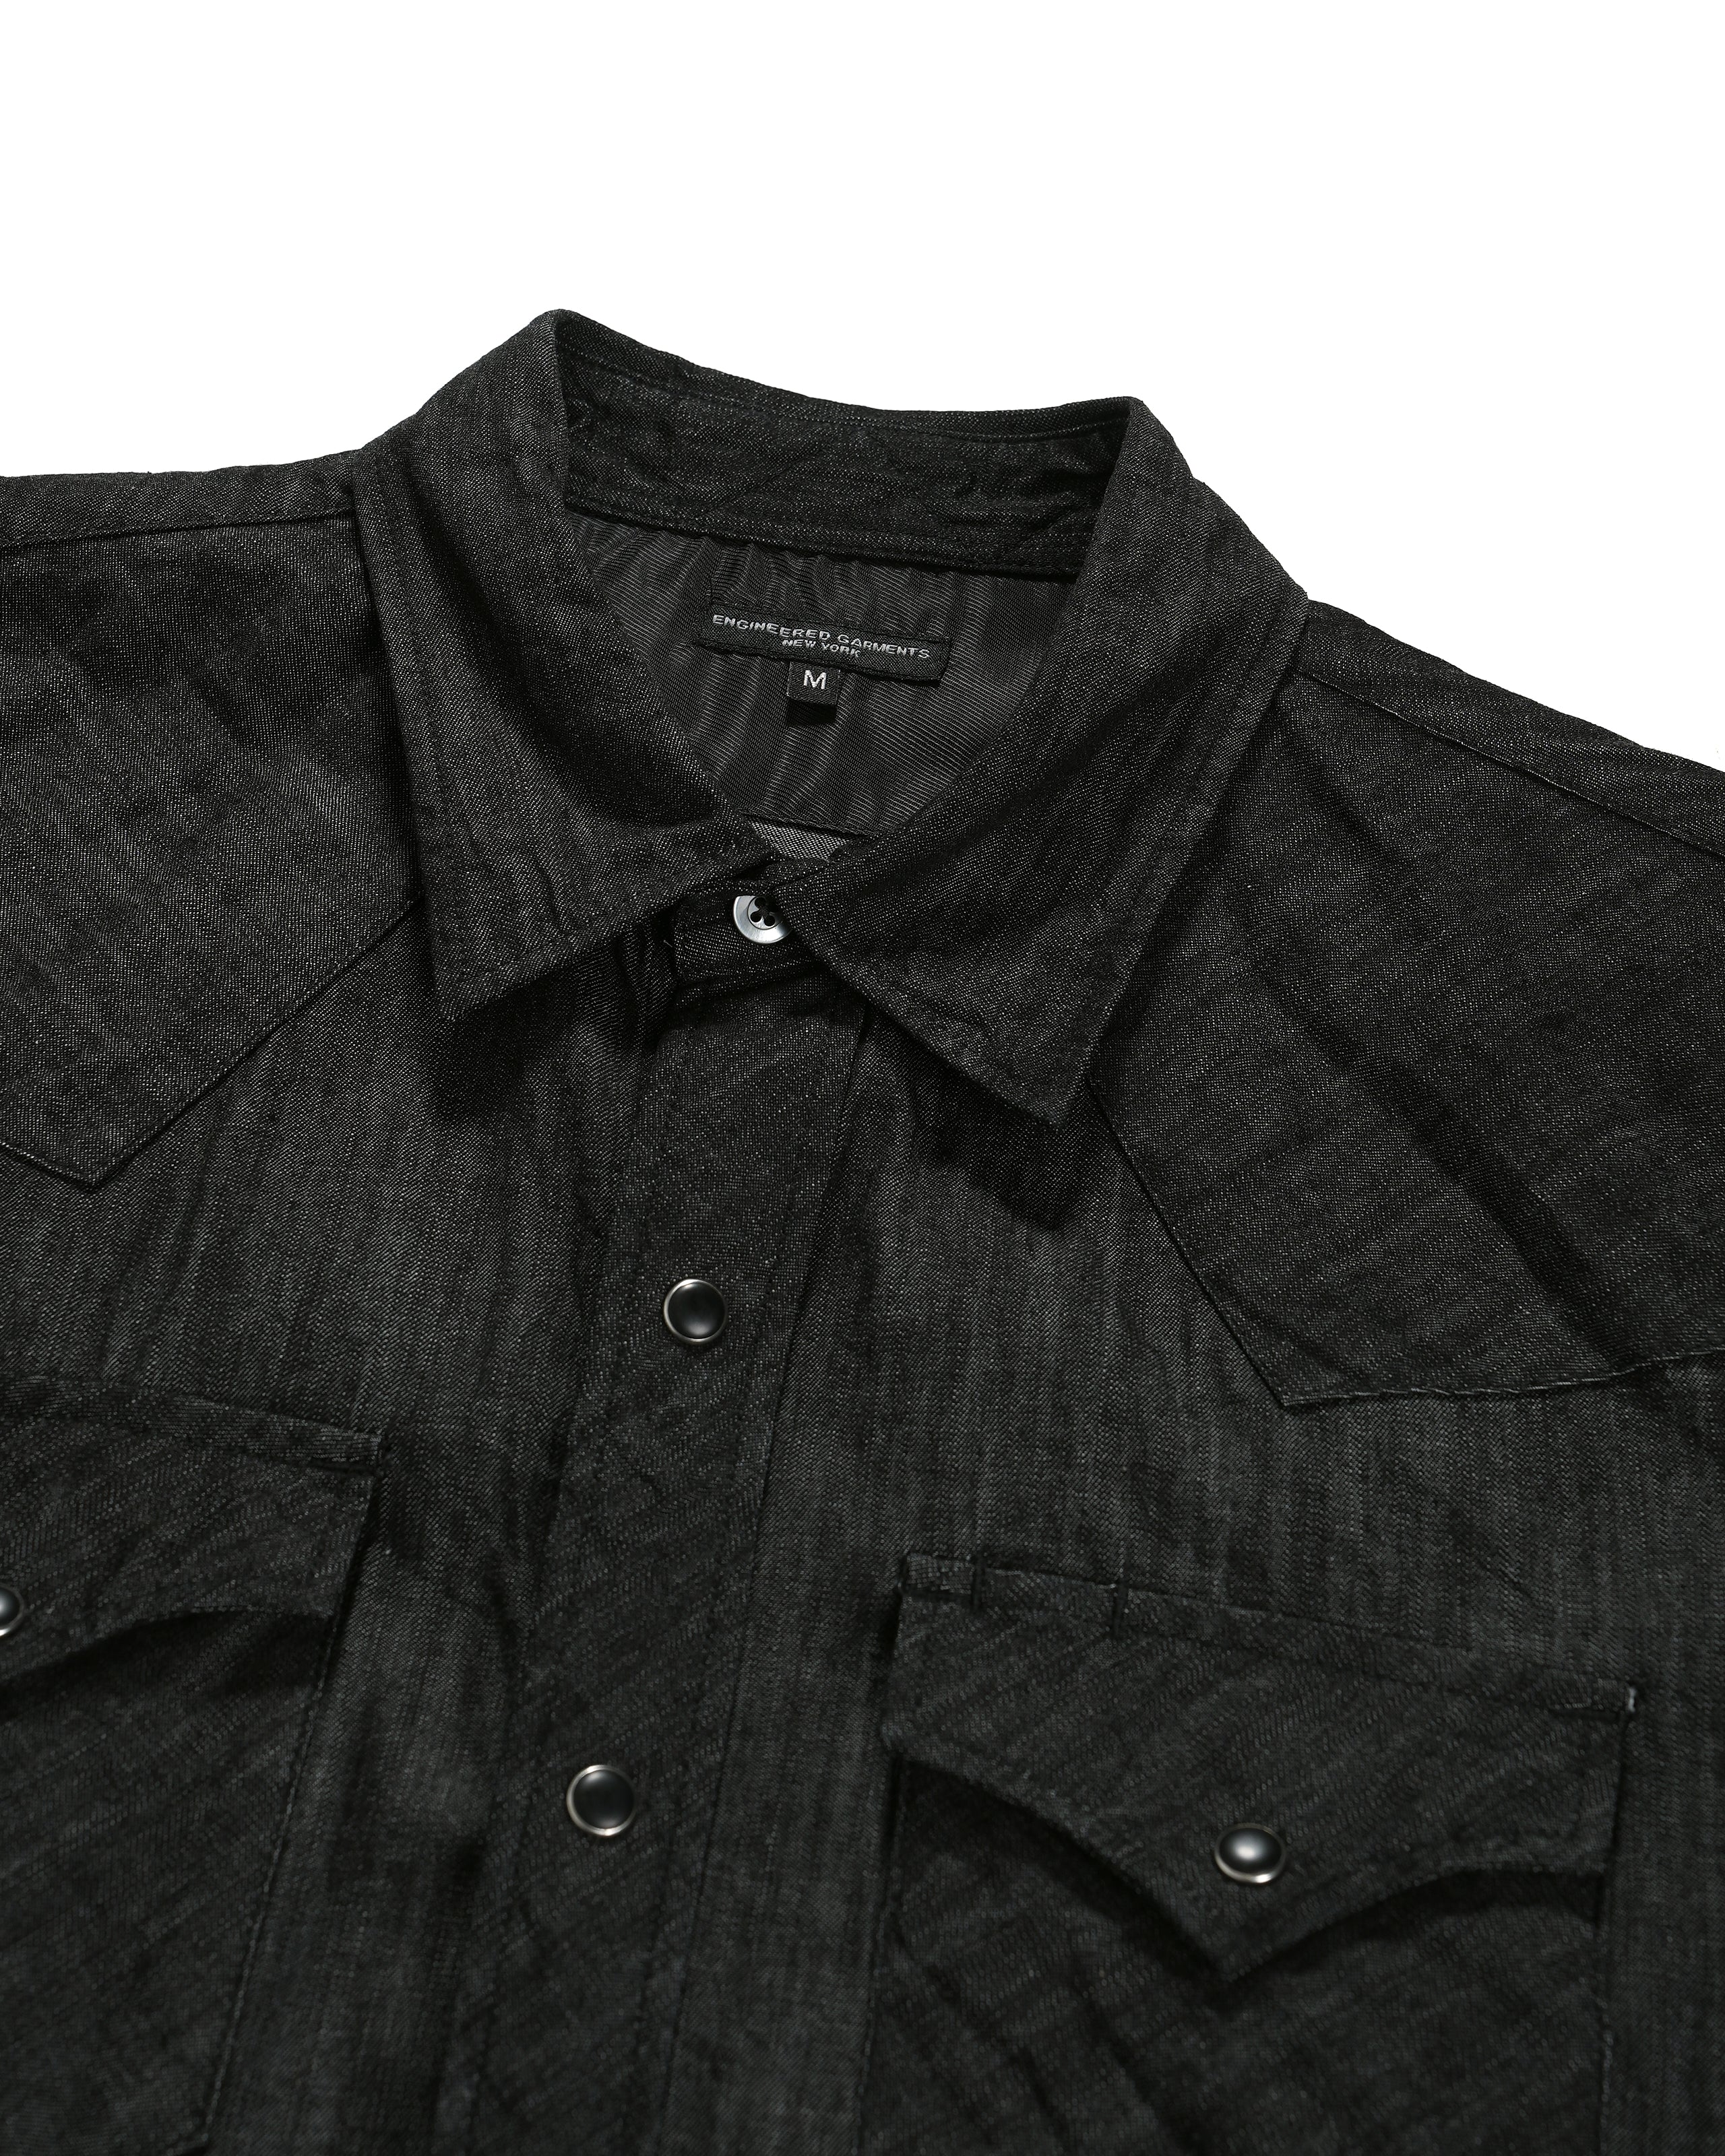 Combo Western Shirt - Black Cotton Denim Shirting